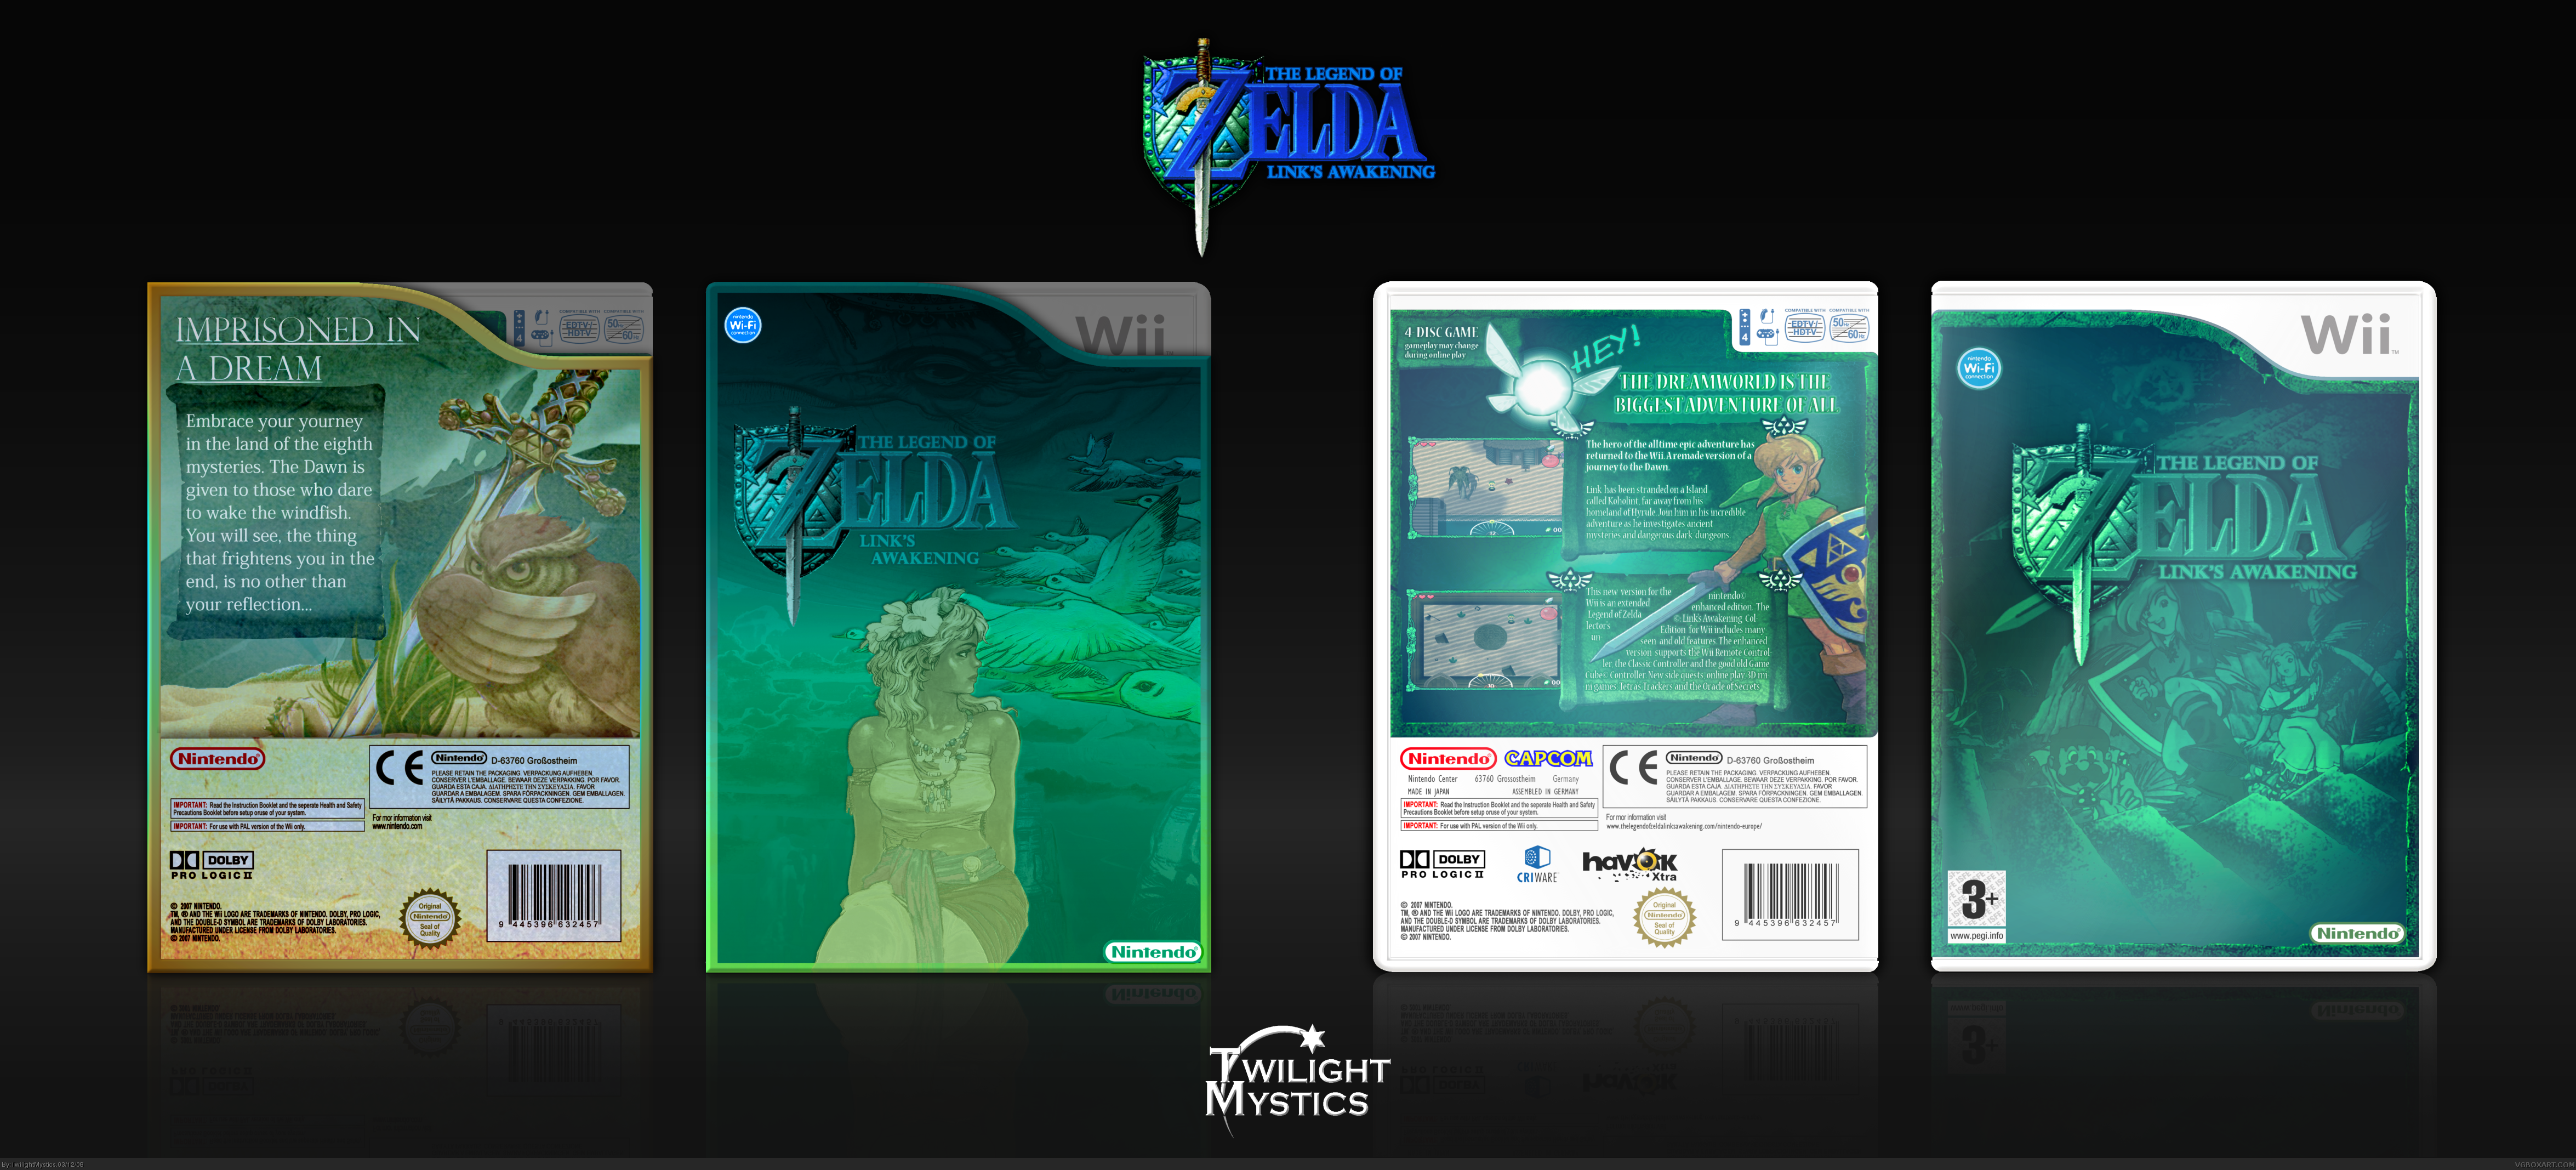 The Legend of Zelda: Link's Awakening CE box cover